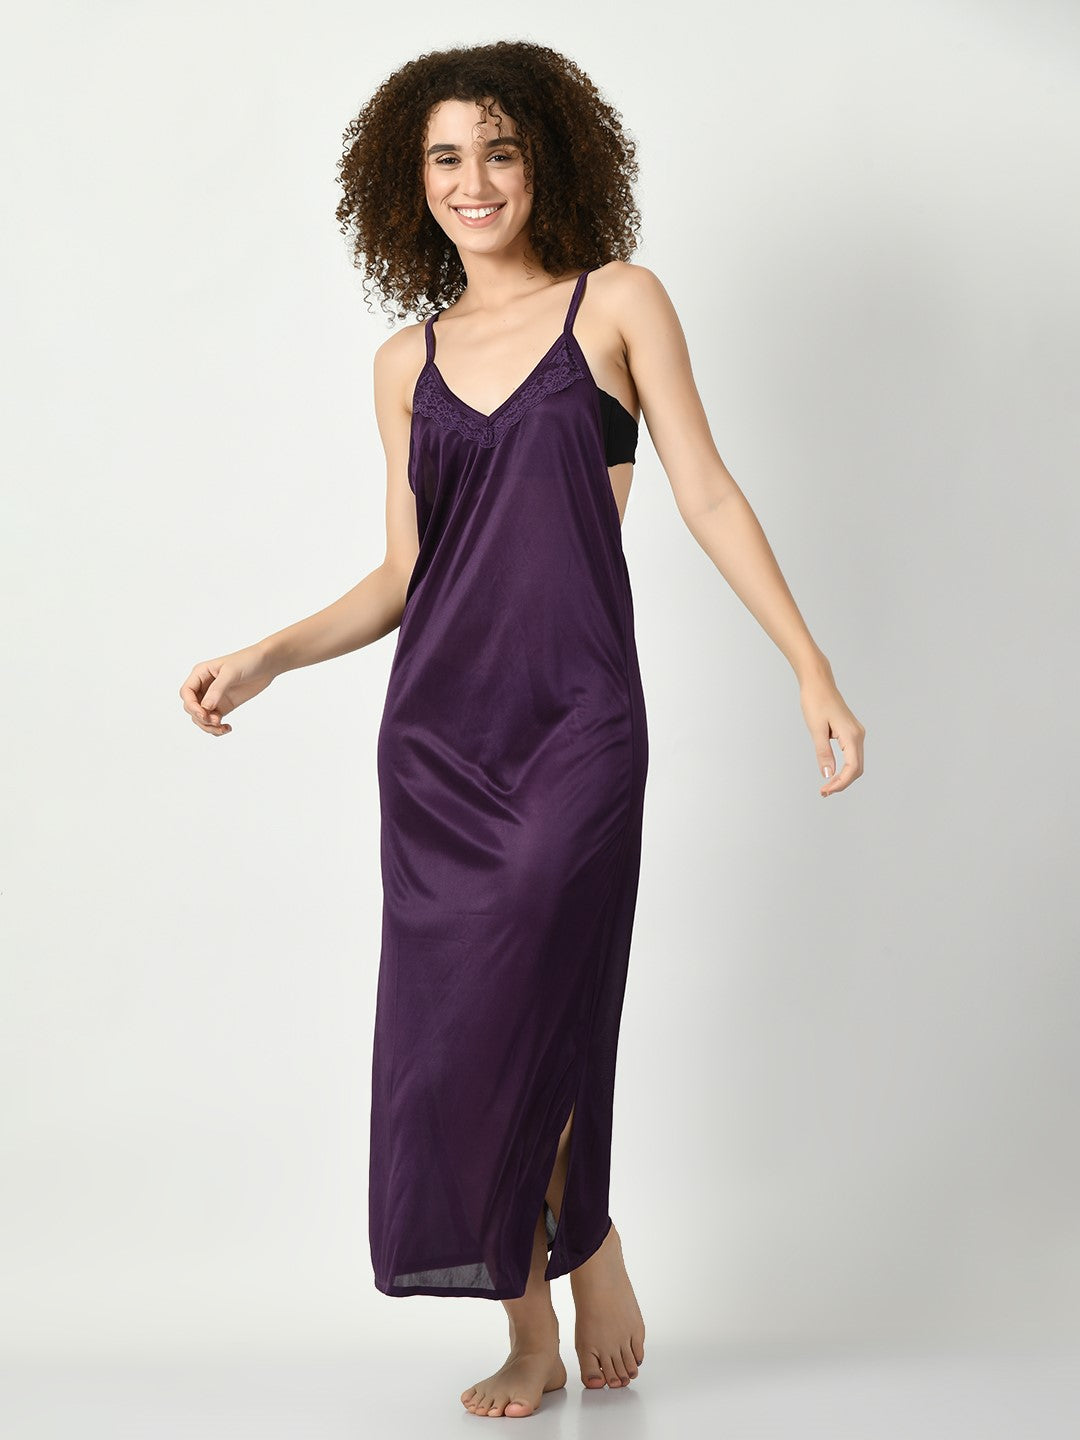 Women's Satin Purple Nightdress - Legit Affair